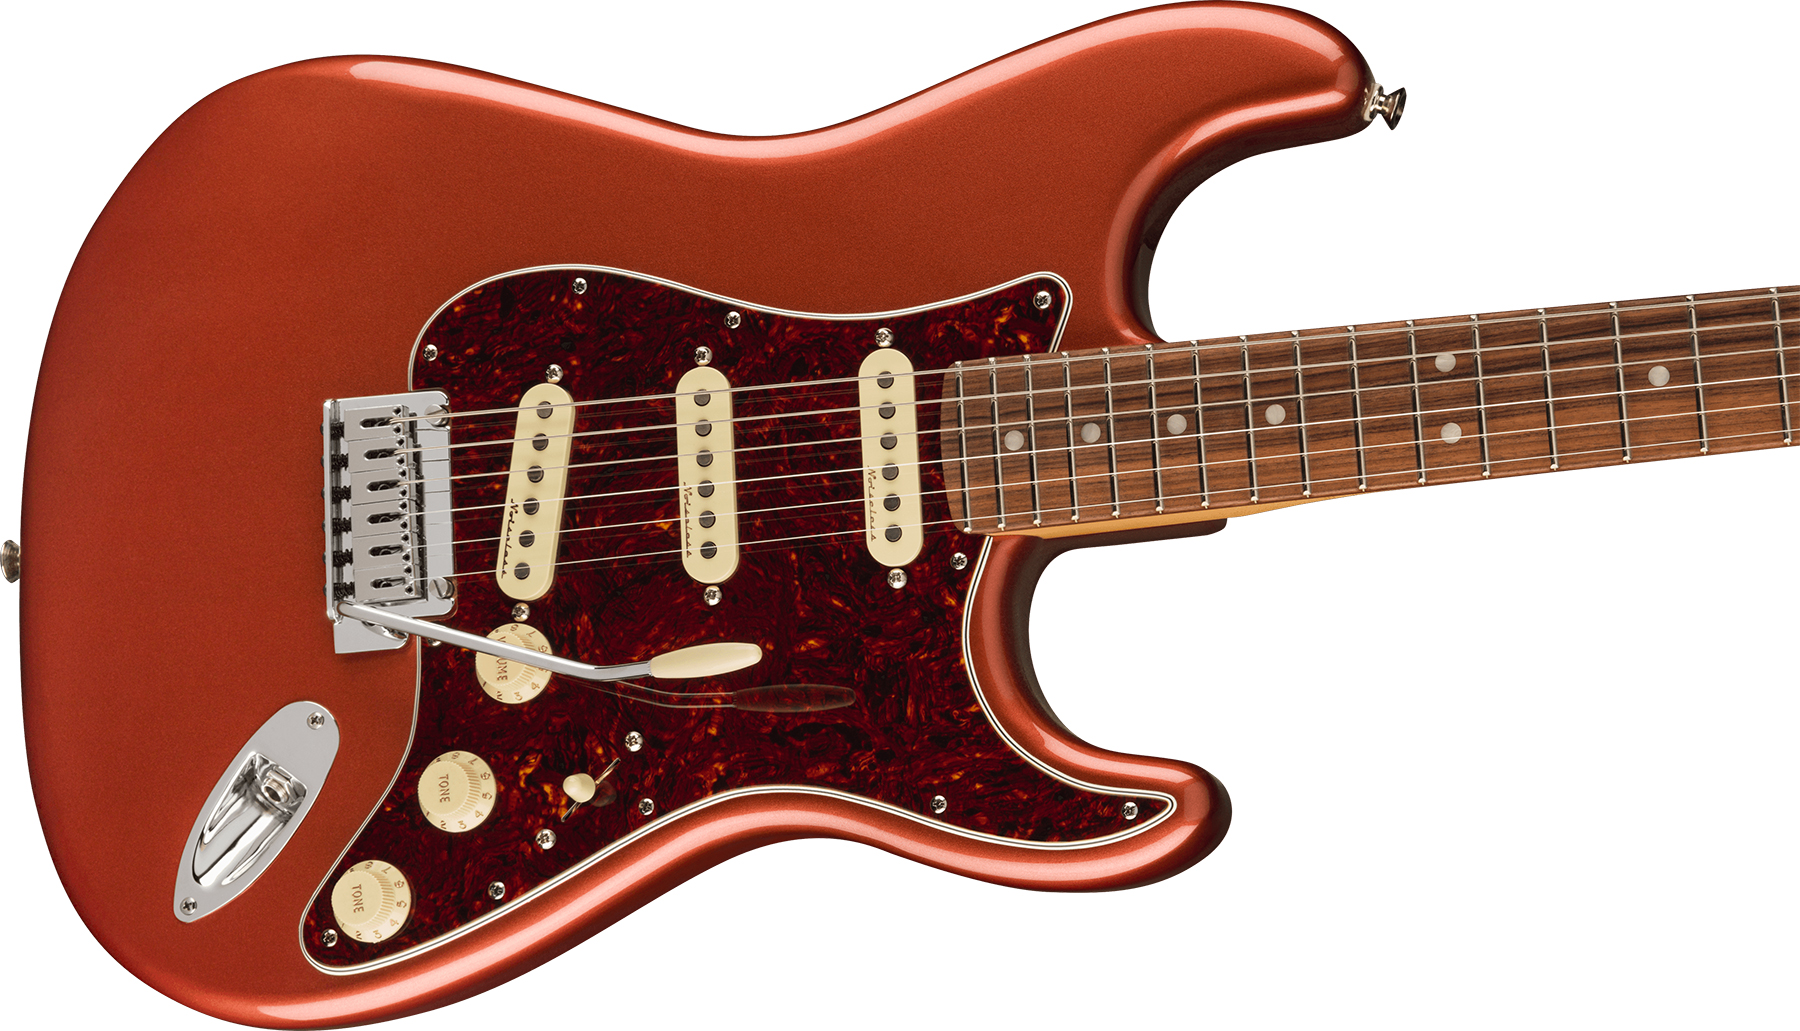 Fender Strat Player Plus Mex 3s Trem Pf - Aged Candy Apple Red - Str shape electric guitar - Variation 2